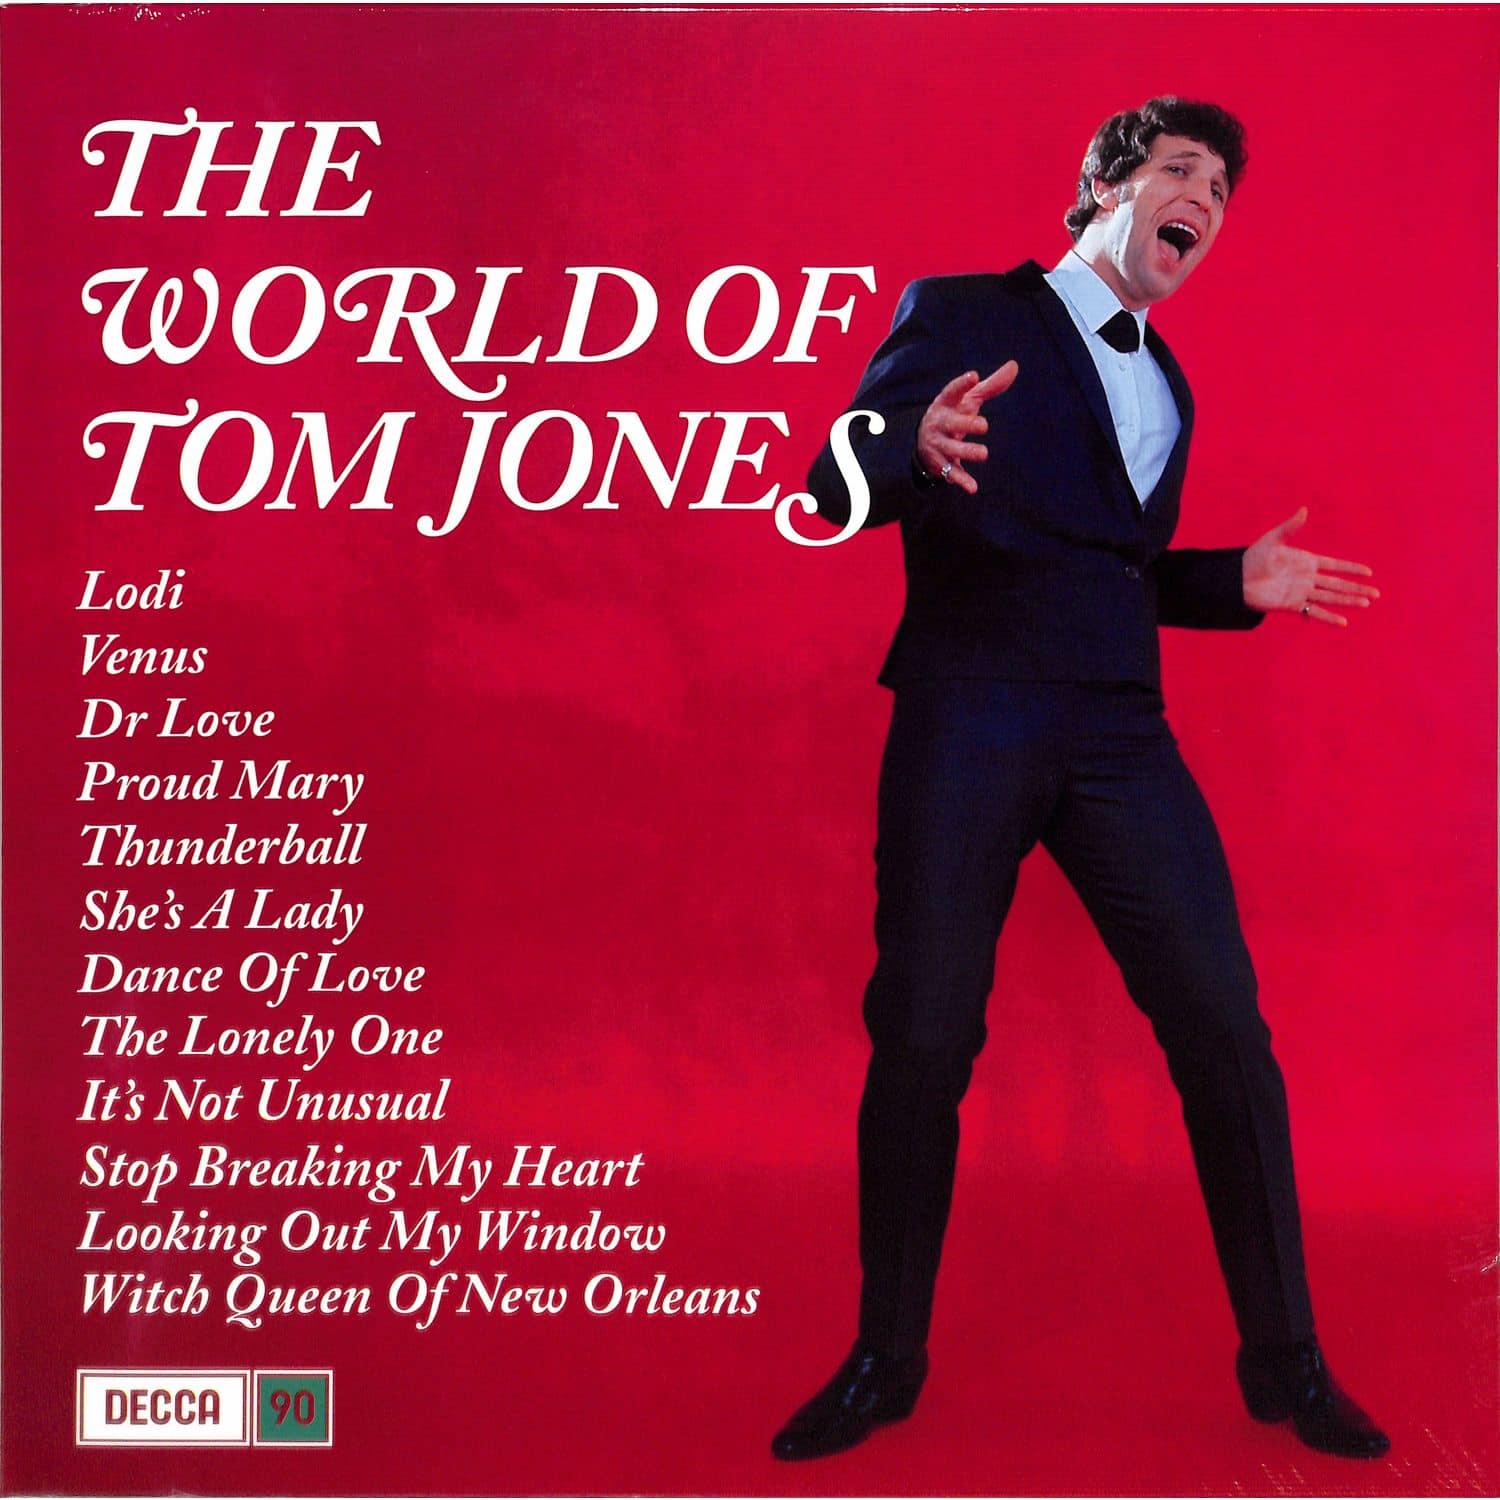 Tom Jones - THE WORLD OF TOM JONES 